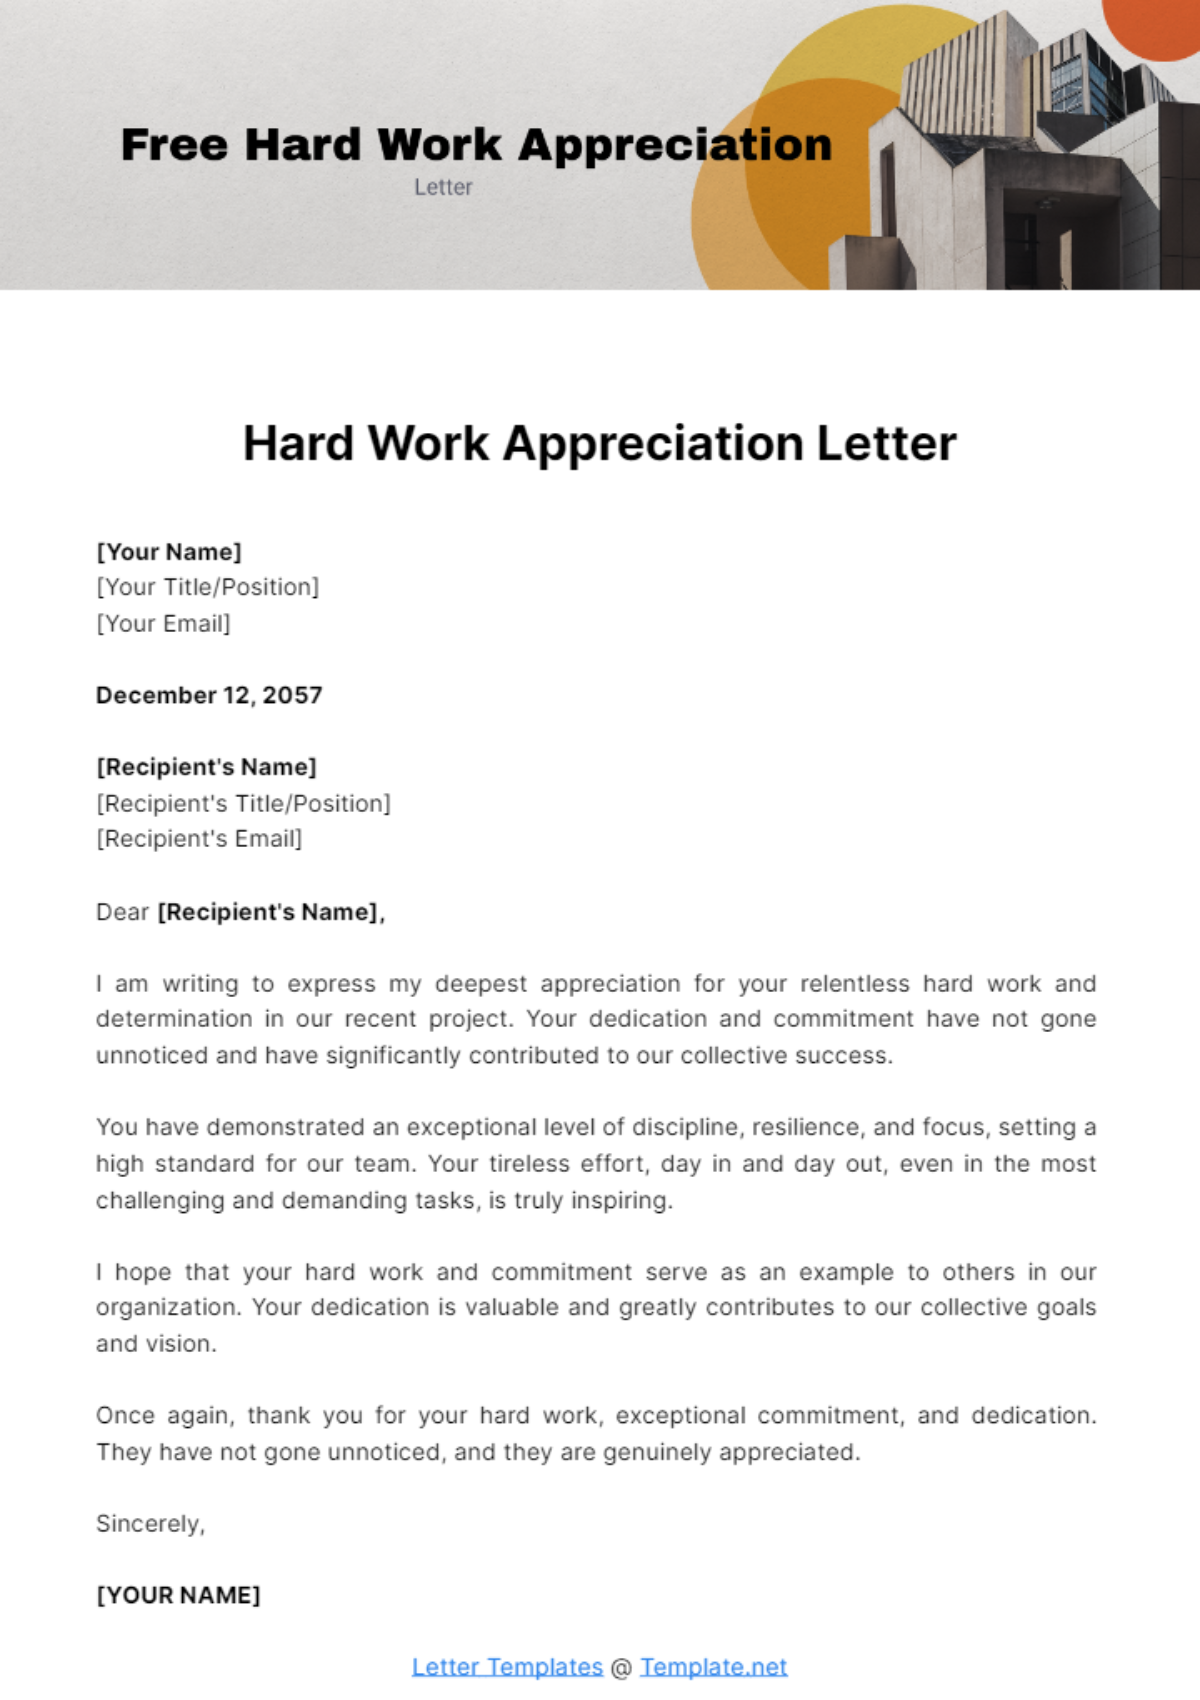 Free Hard Work Appreciation Letter Template